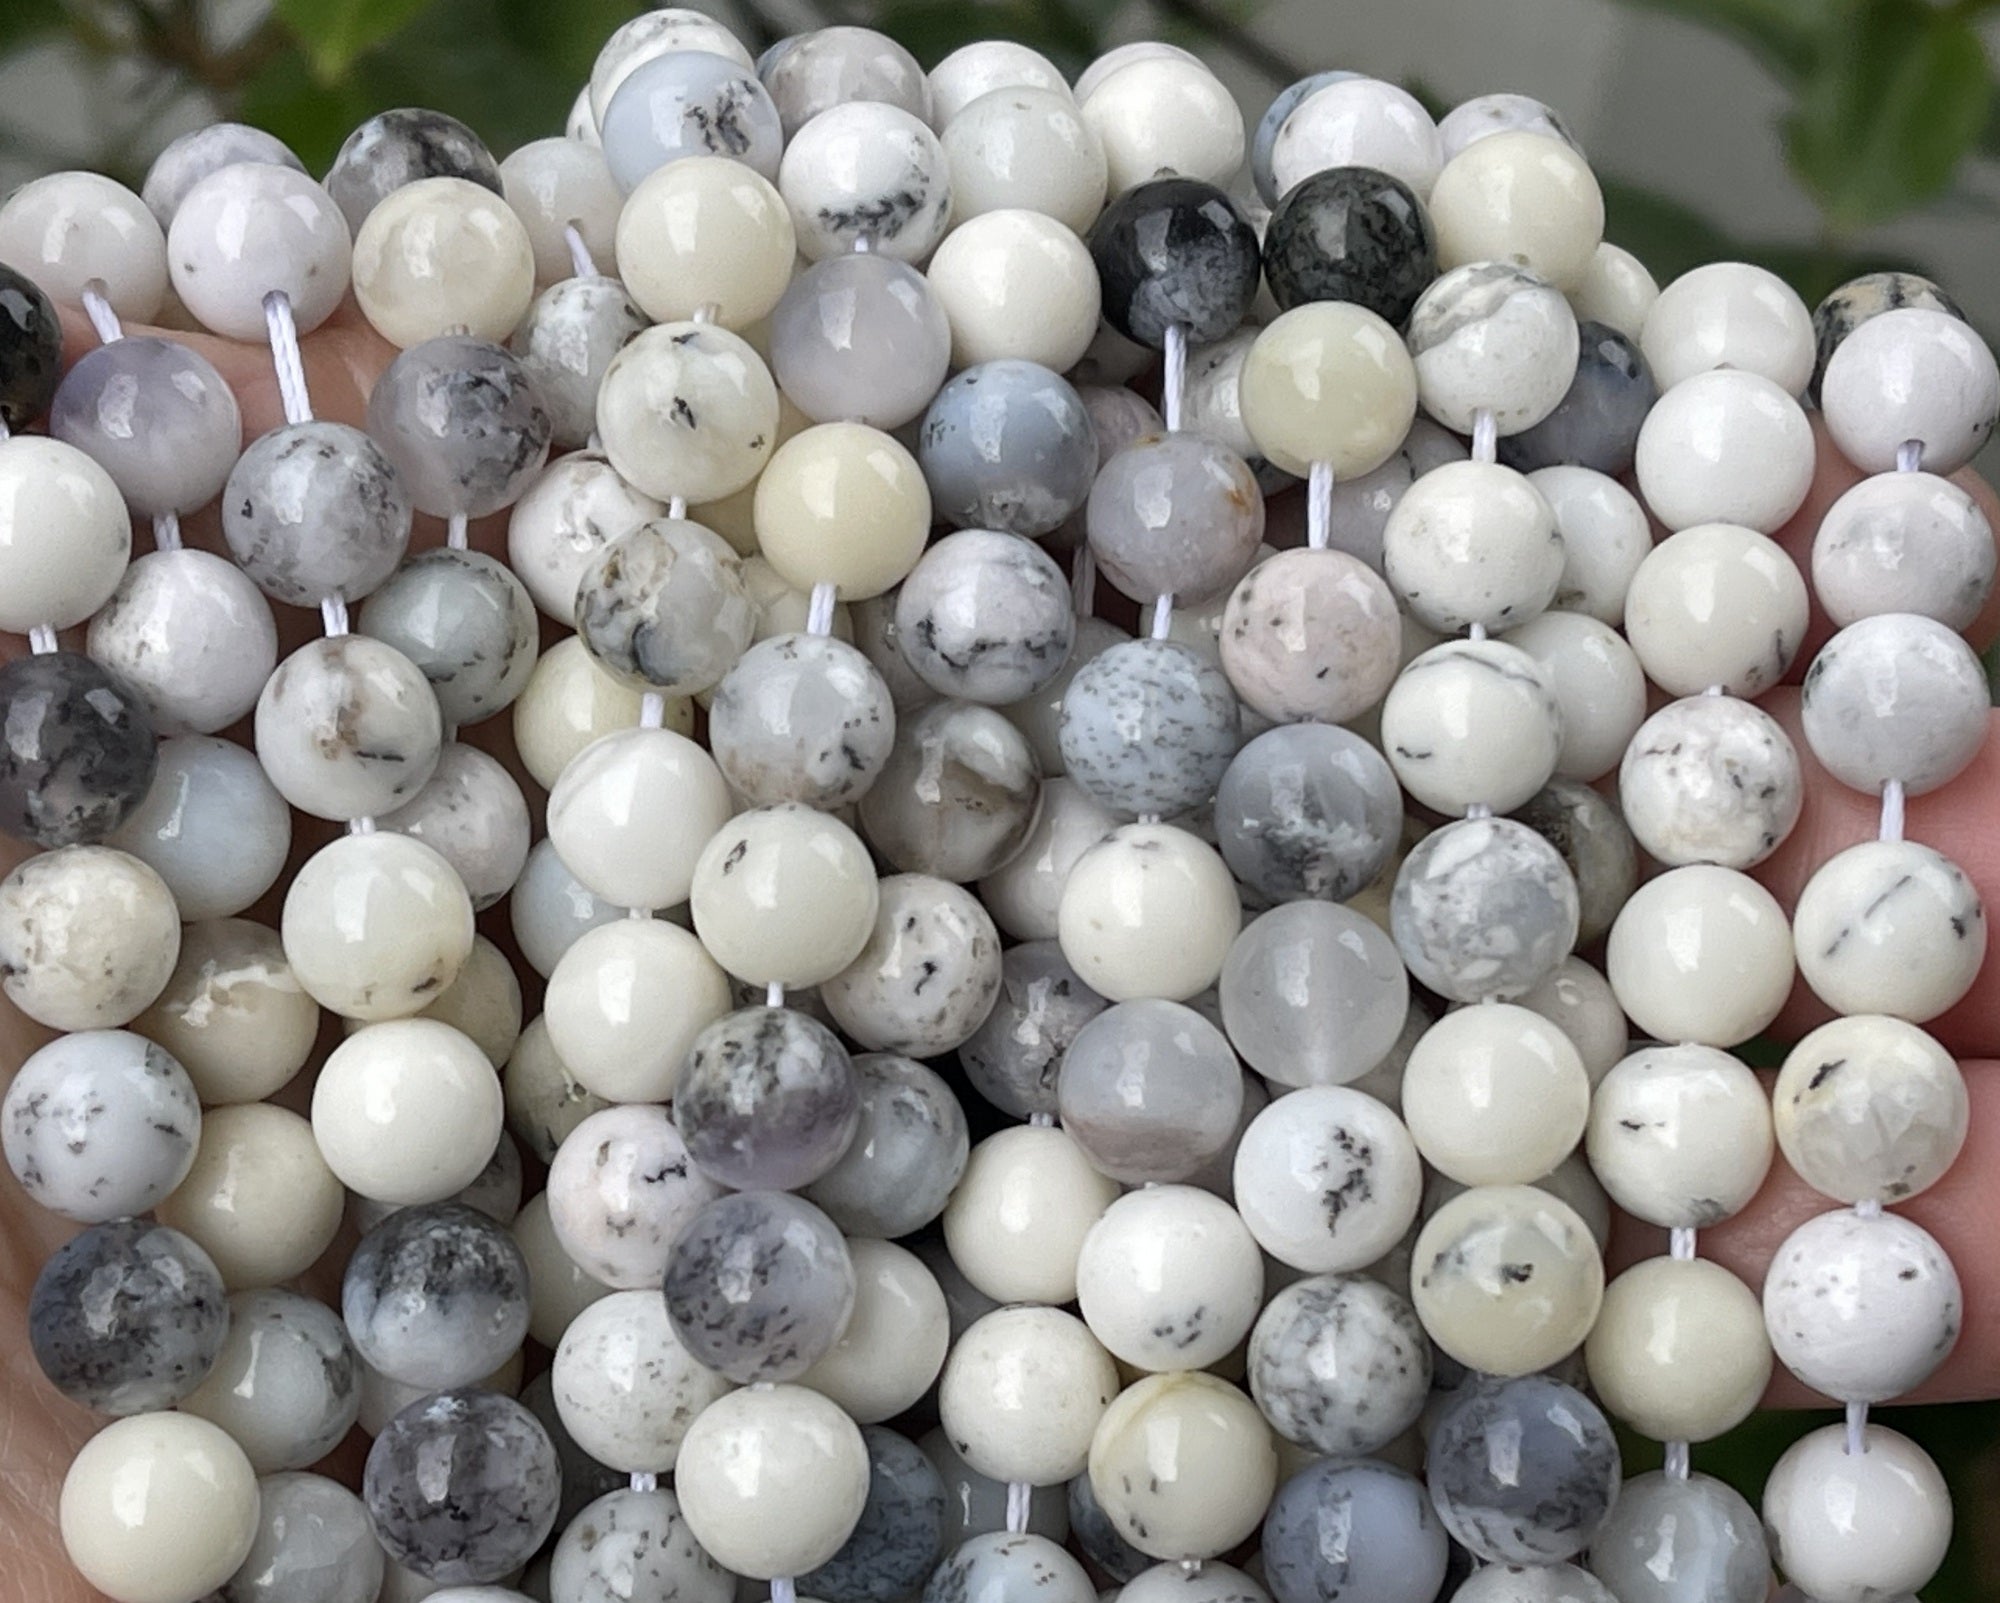 White Dendritic Opal 8mm round natural gemstone beads 15" strand